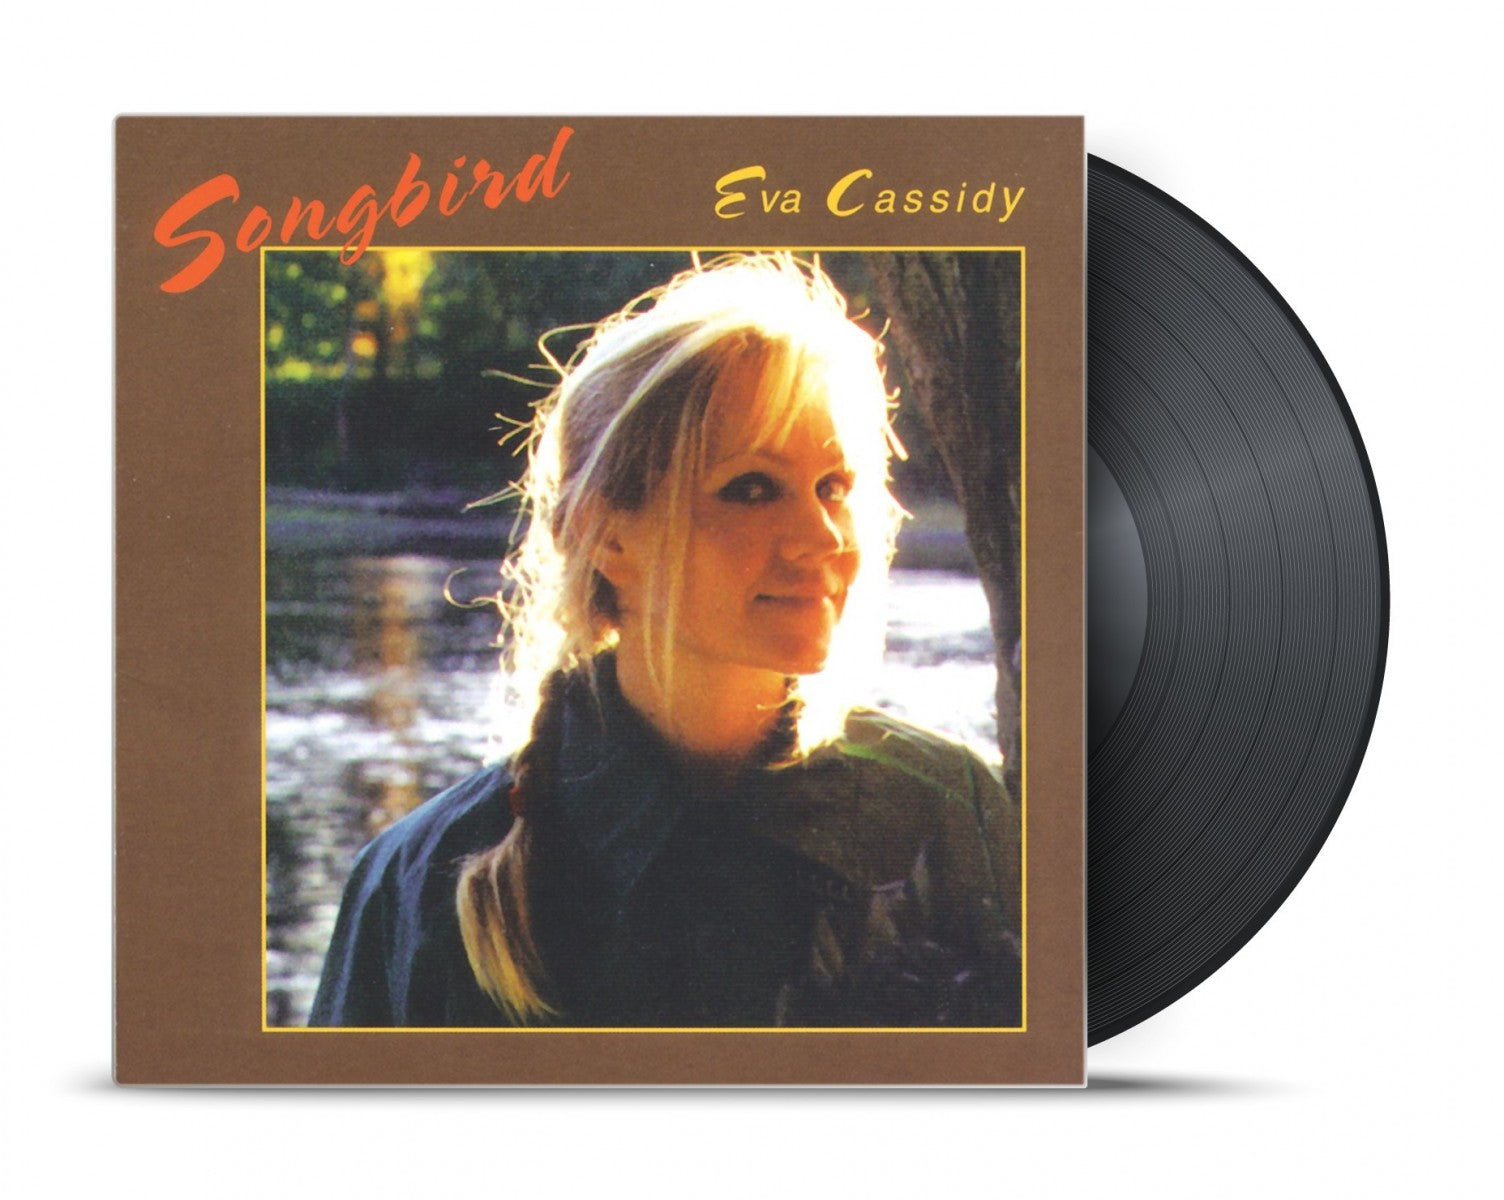 Eva Cassidy – Songbird LP